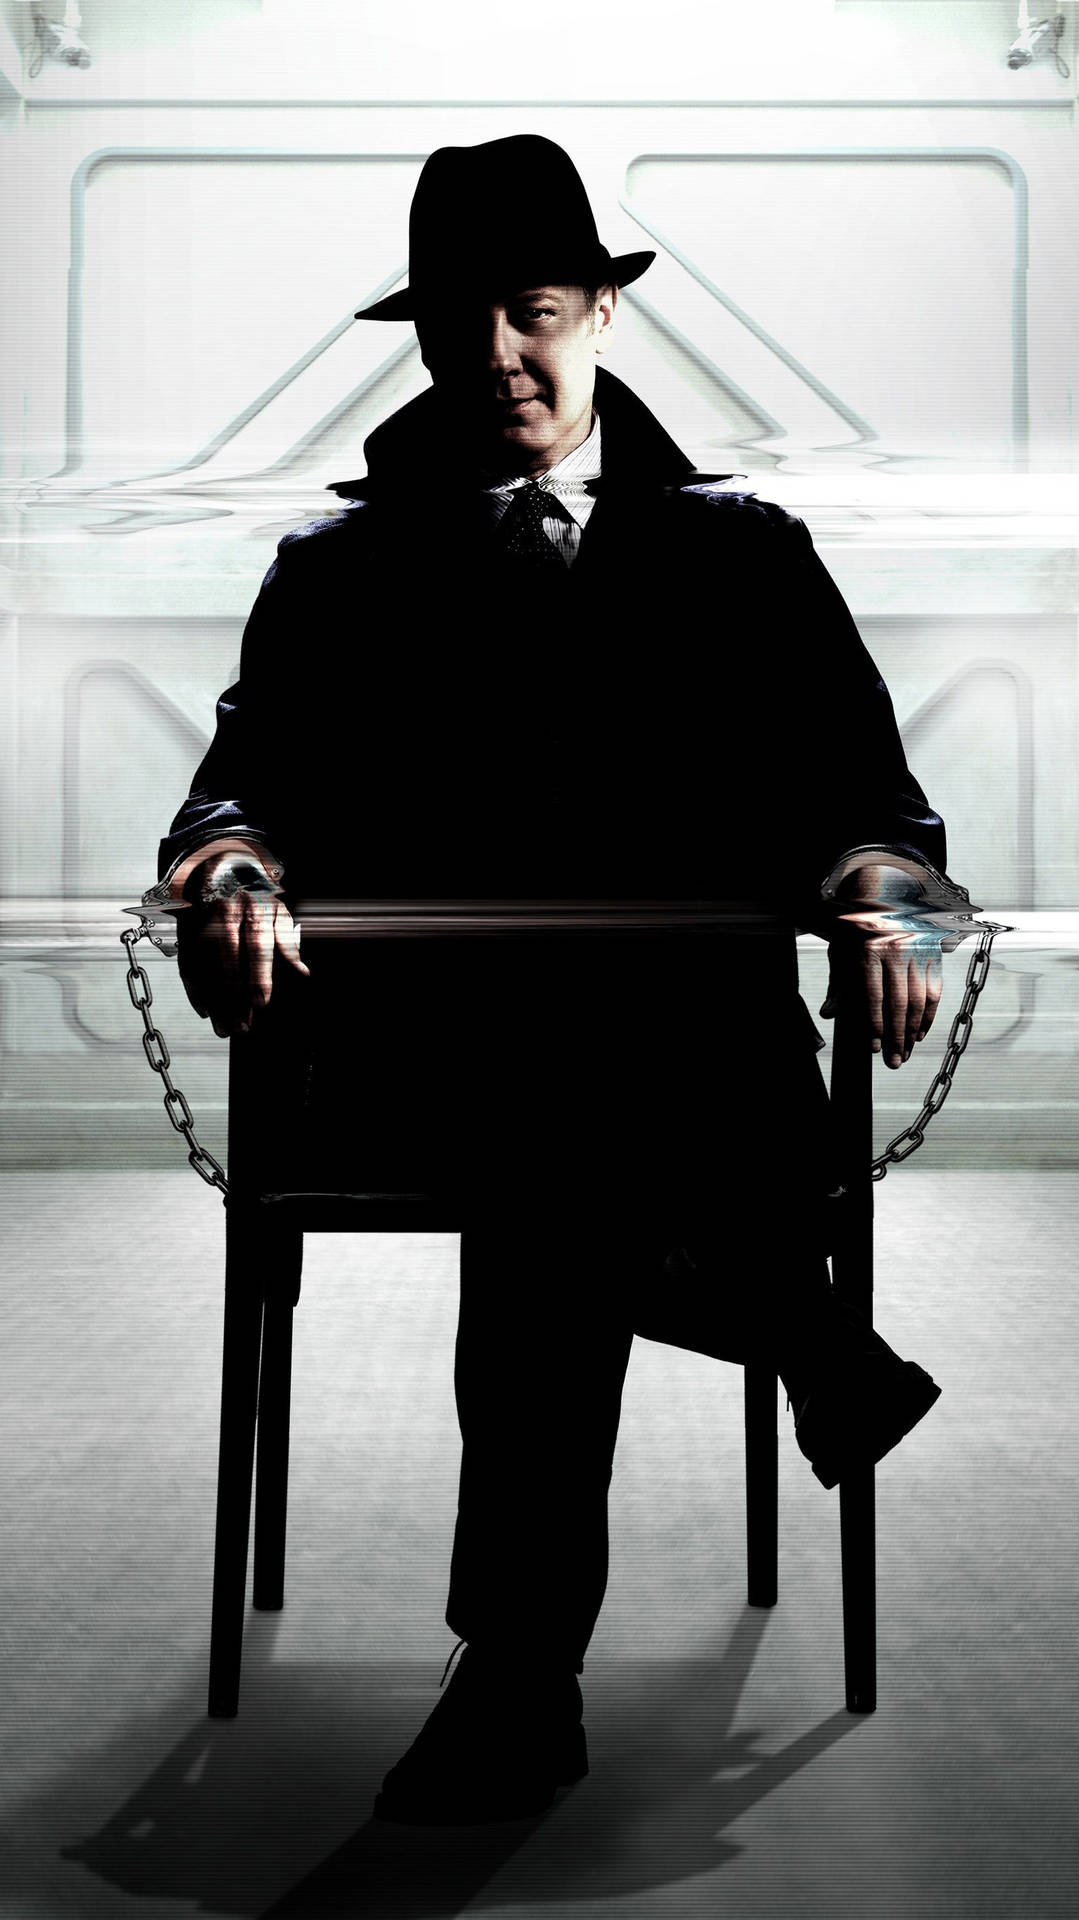 Sitting Reddington The Blacklist Background